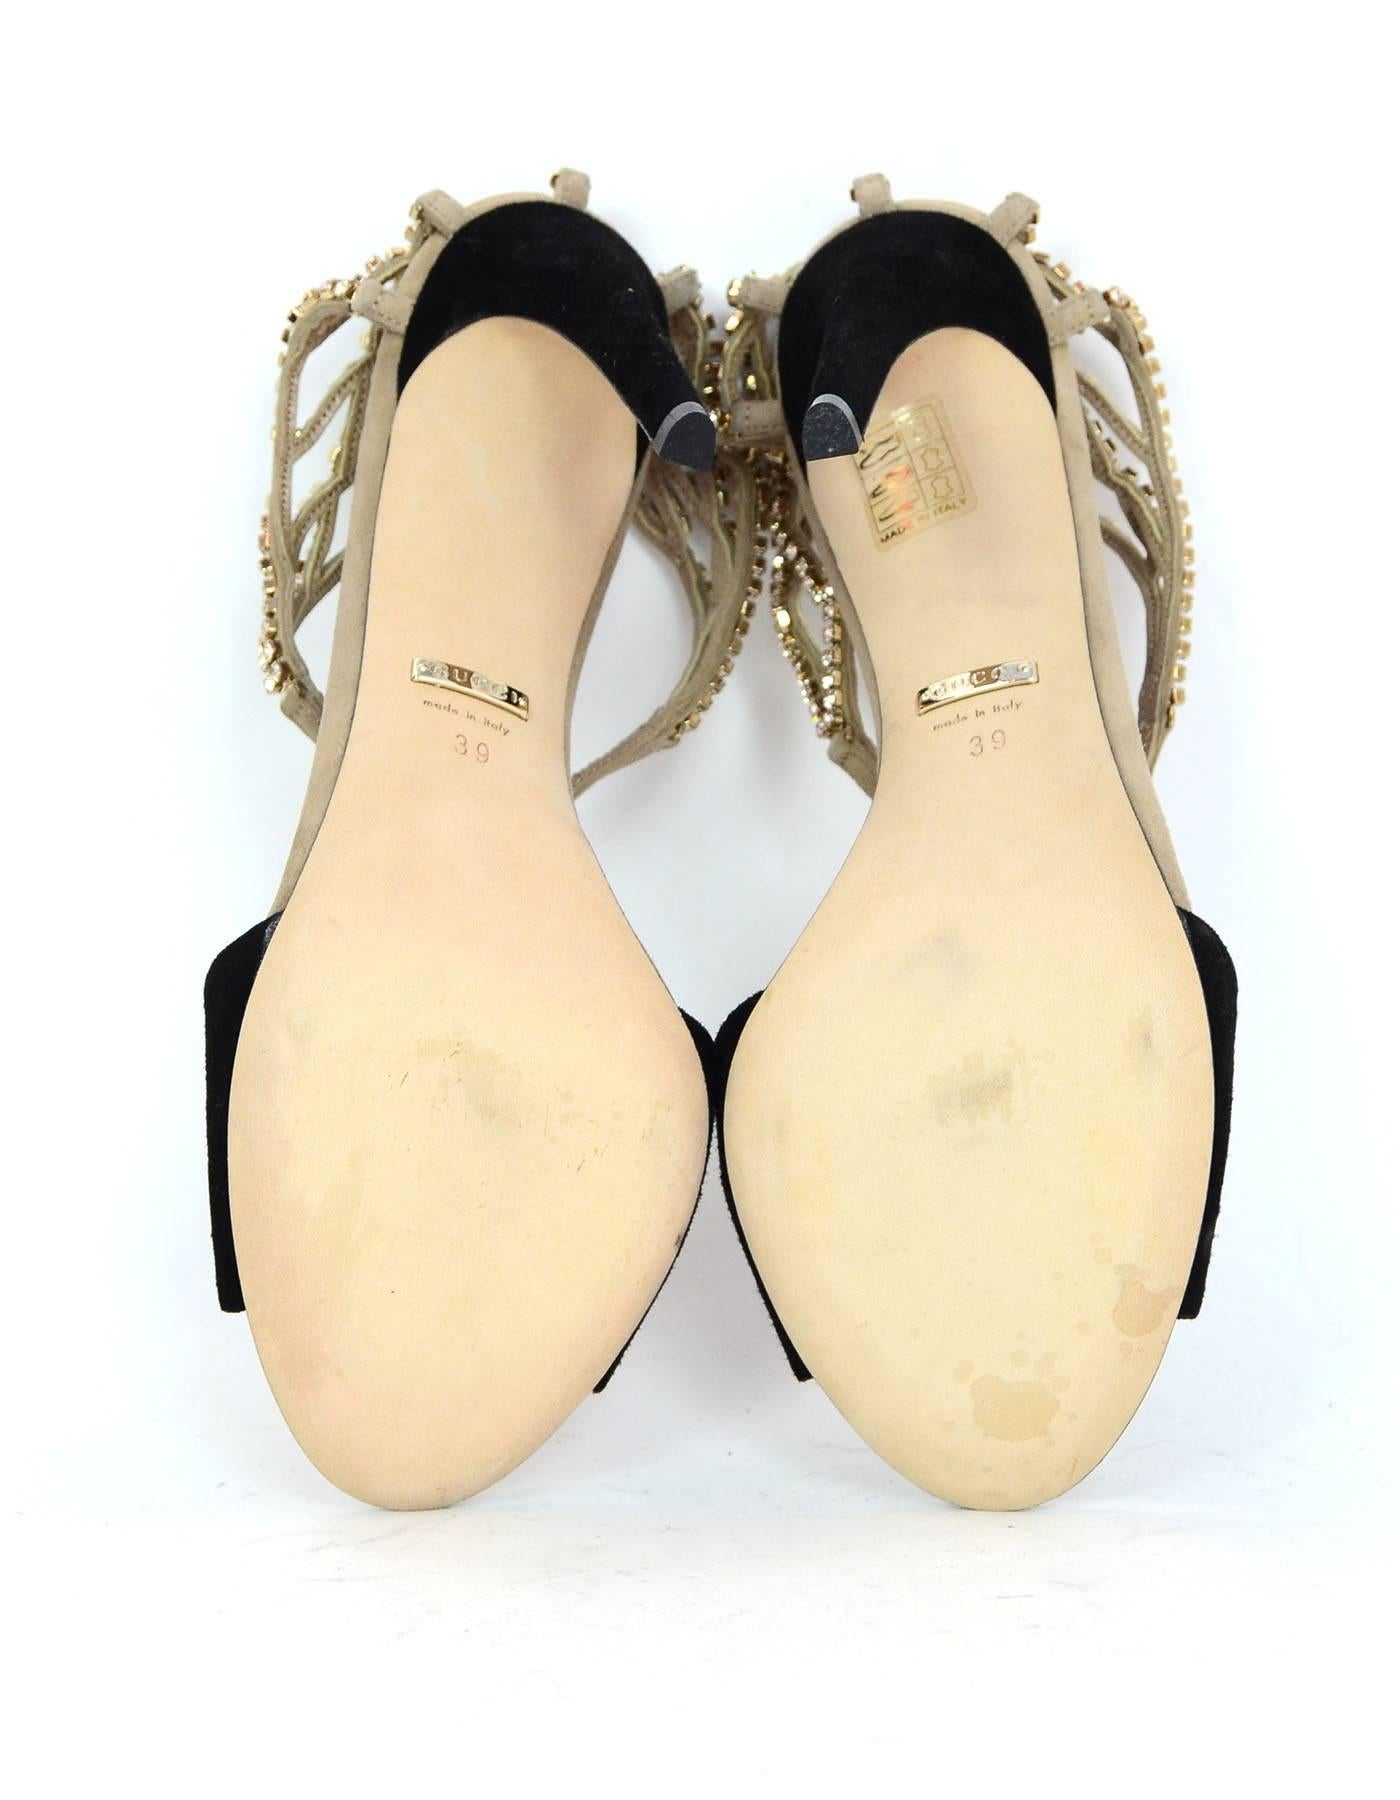 Gucci Black & Beige Suede & Crystal Sandals Sz 39 NEW 1